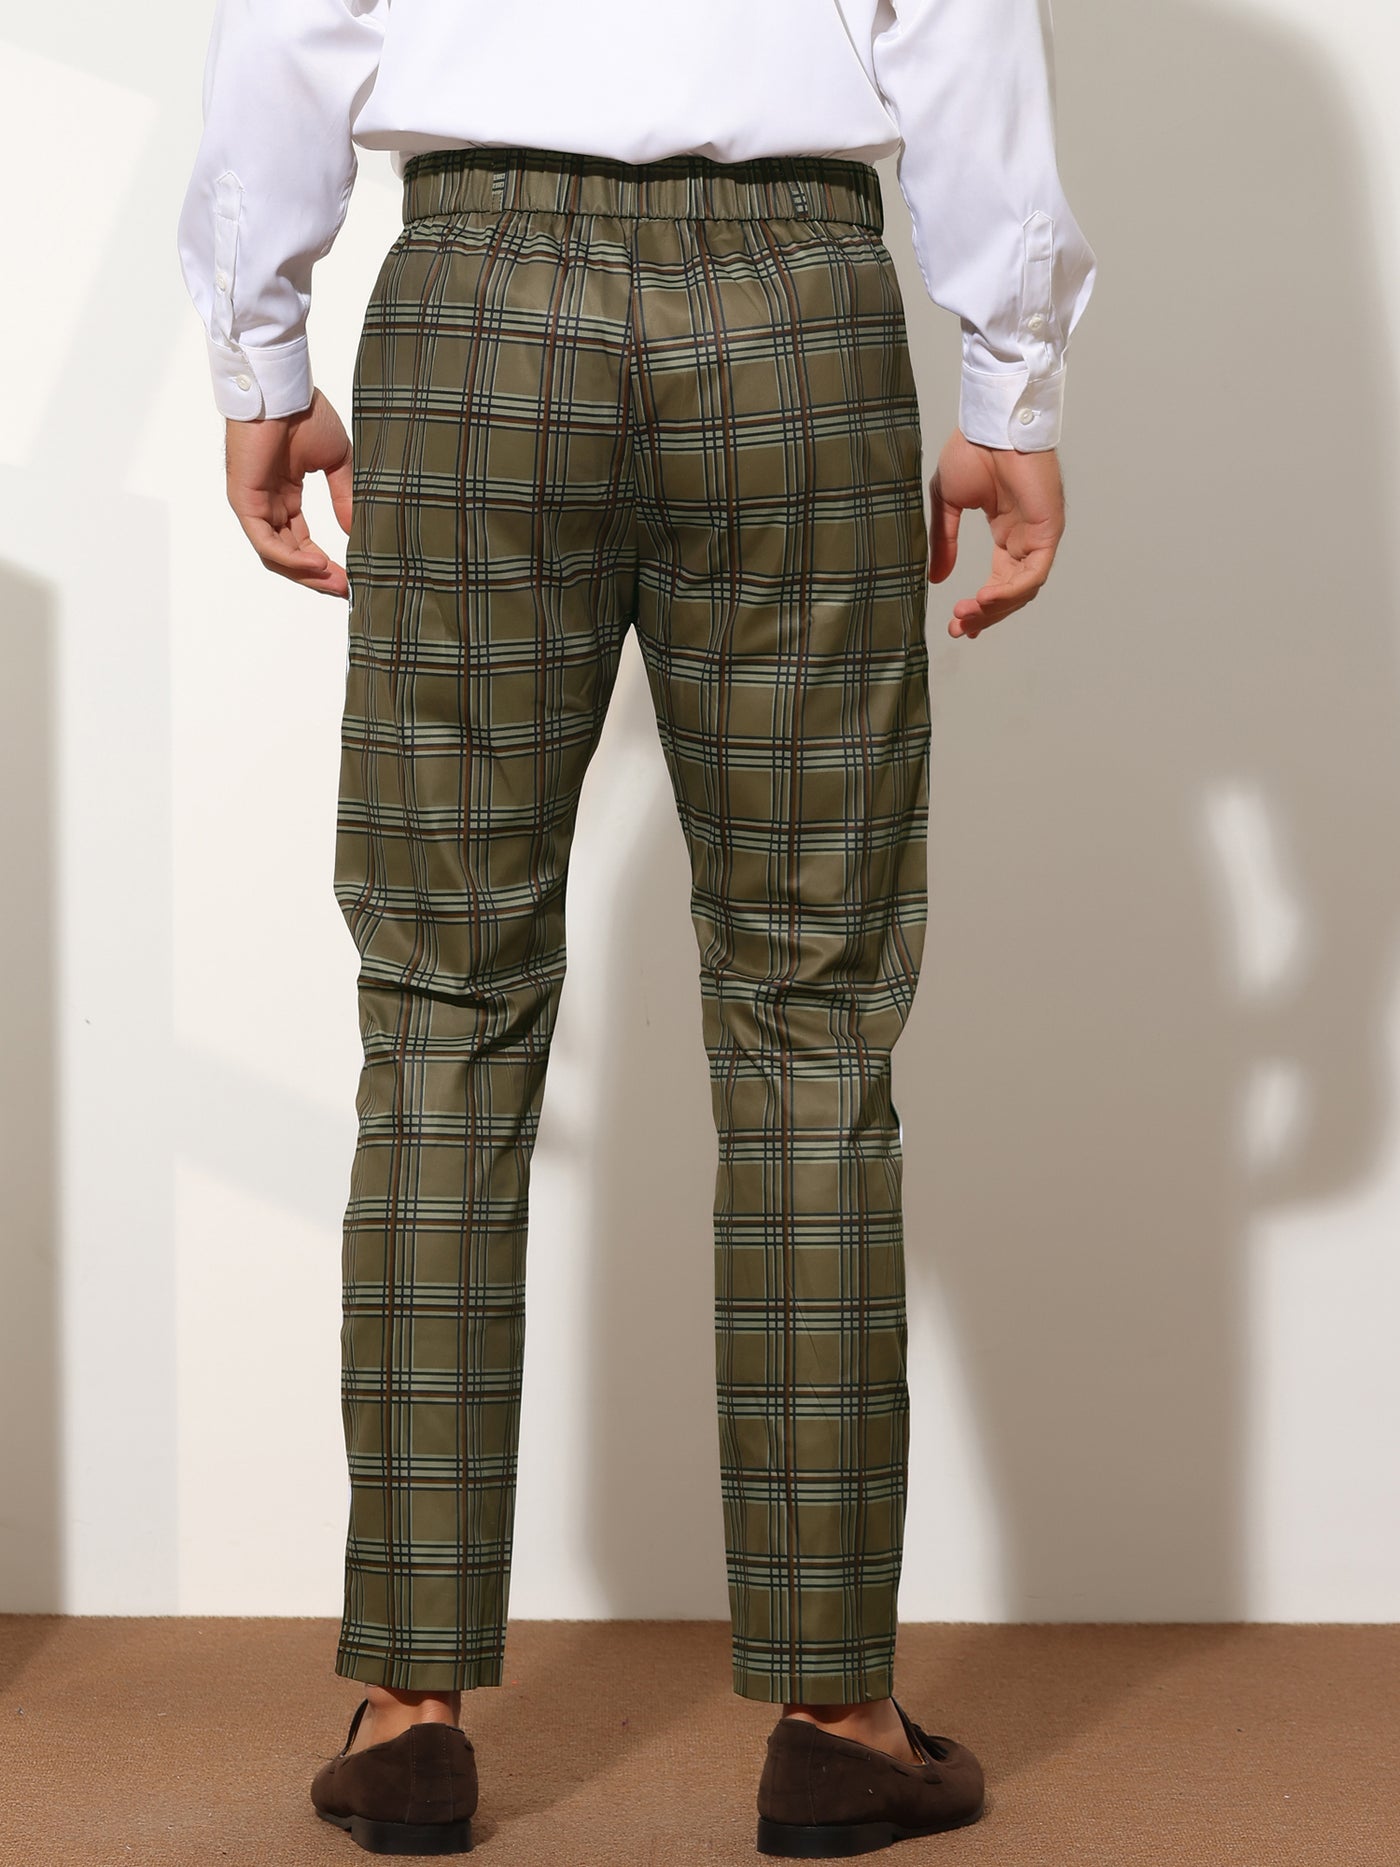 Bublédon Printed Dress Pants for Men's Slim Fit Flat Front Pattern Formal Trousers